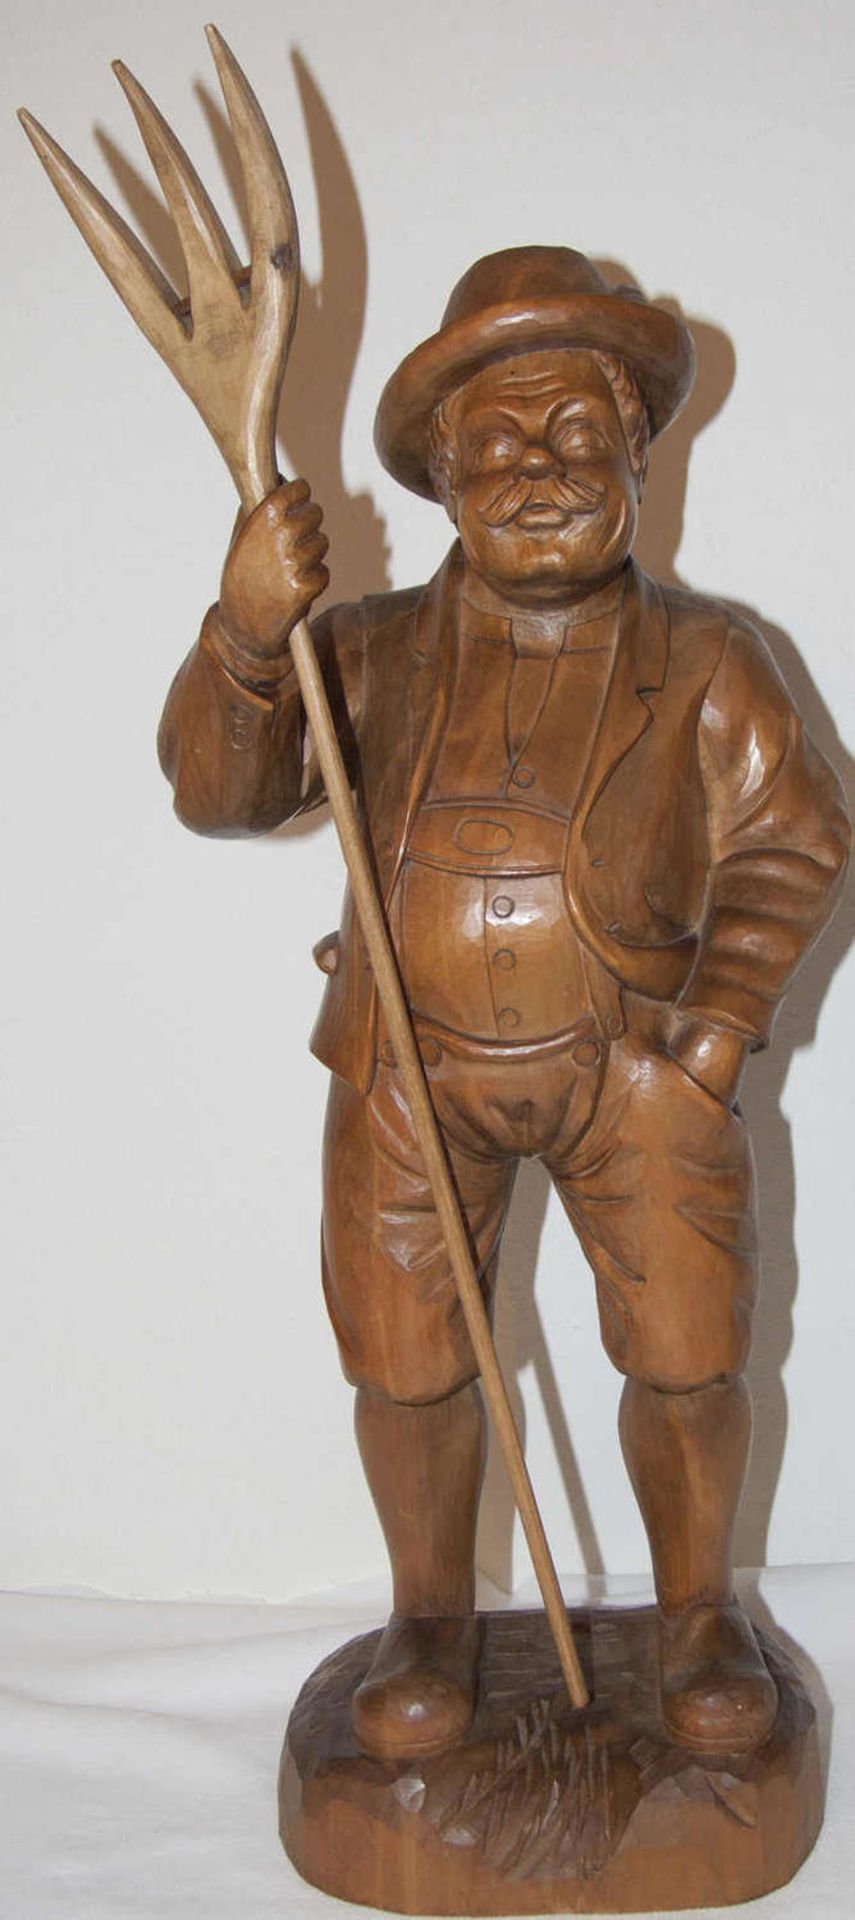 Holz - Skulptur "Bauer mit Heugabel". Massiv - Holz, handgeschnitzt. Höhe: ca. 61 cm. Sehr guter